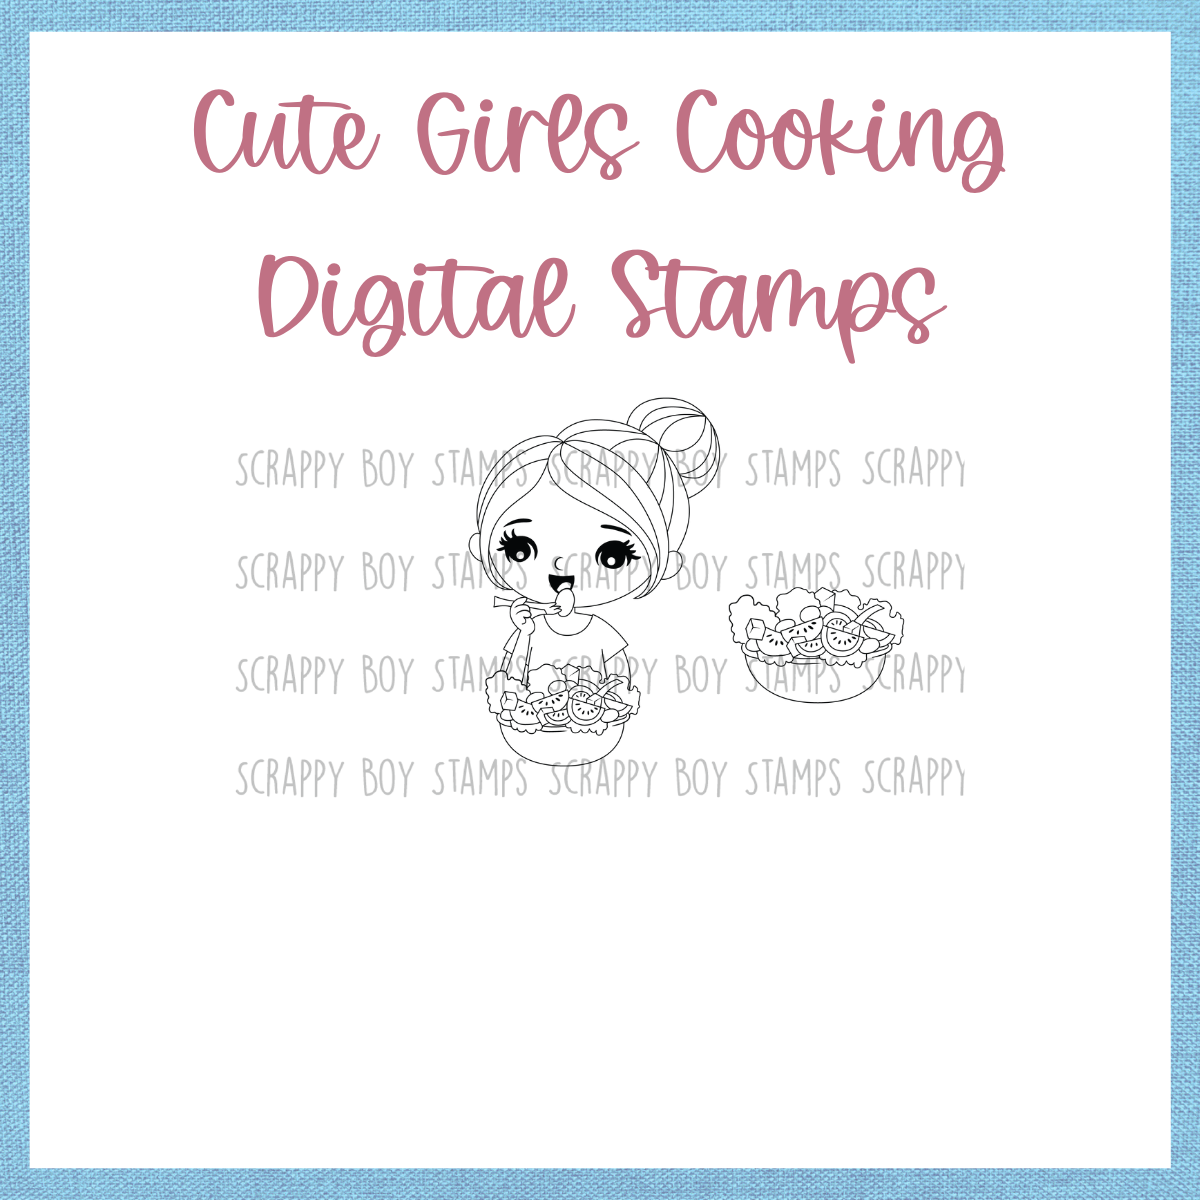 Cute Girls Cooking - DIGITAL STAMP scrappyboystamps